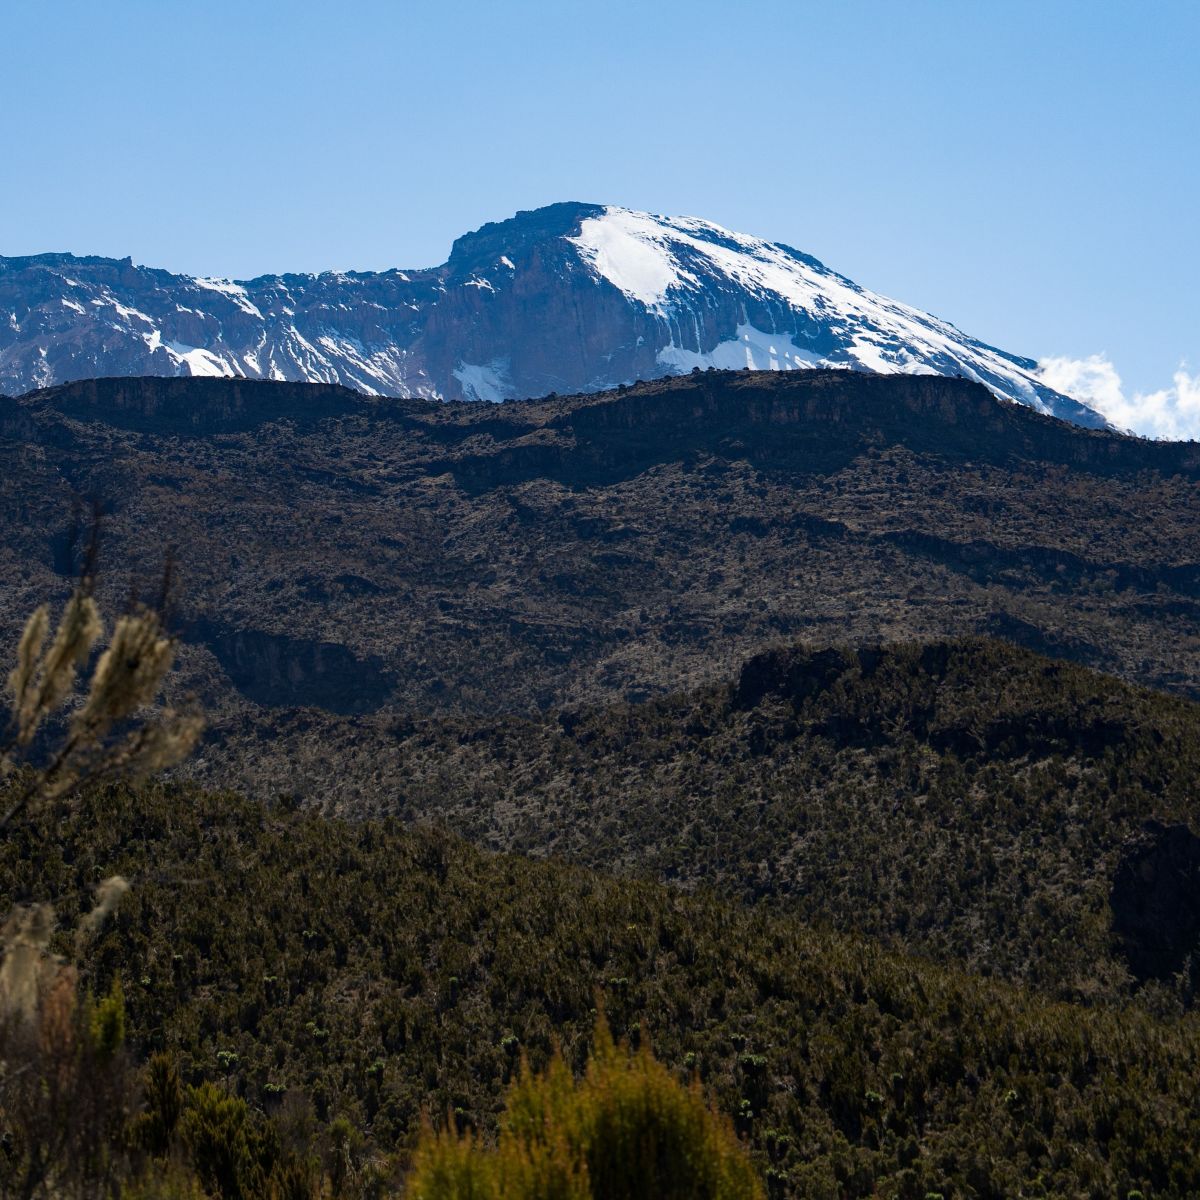 View upwards towards Kilimanjaro's peak from the moorland band